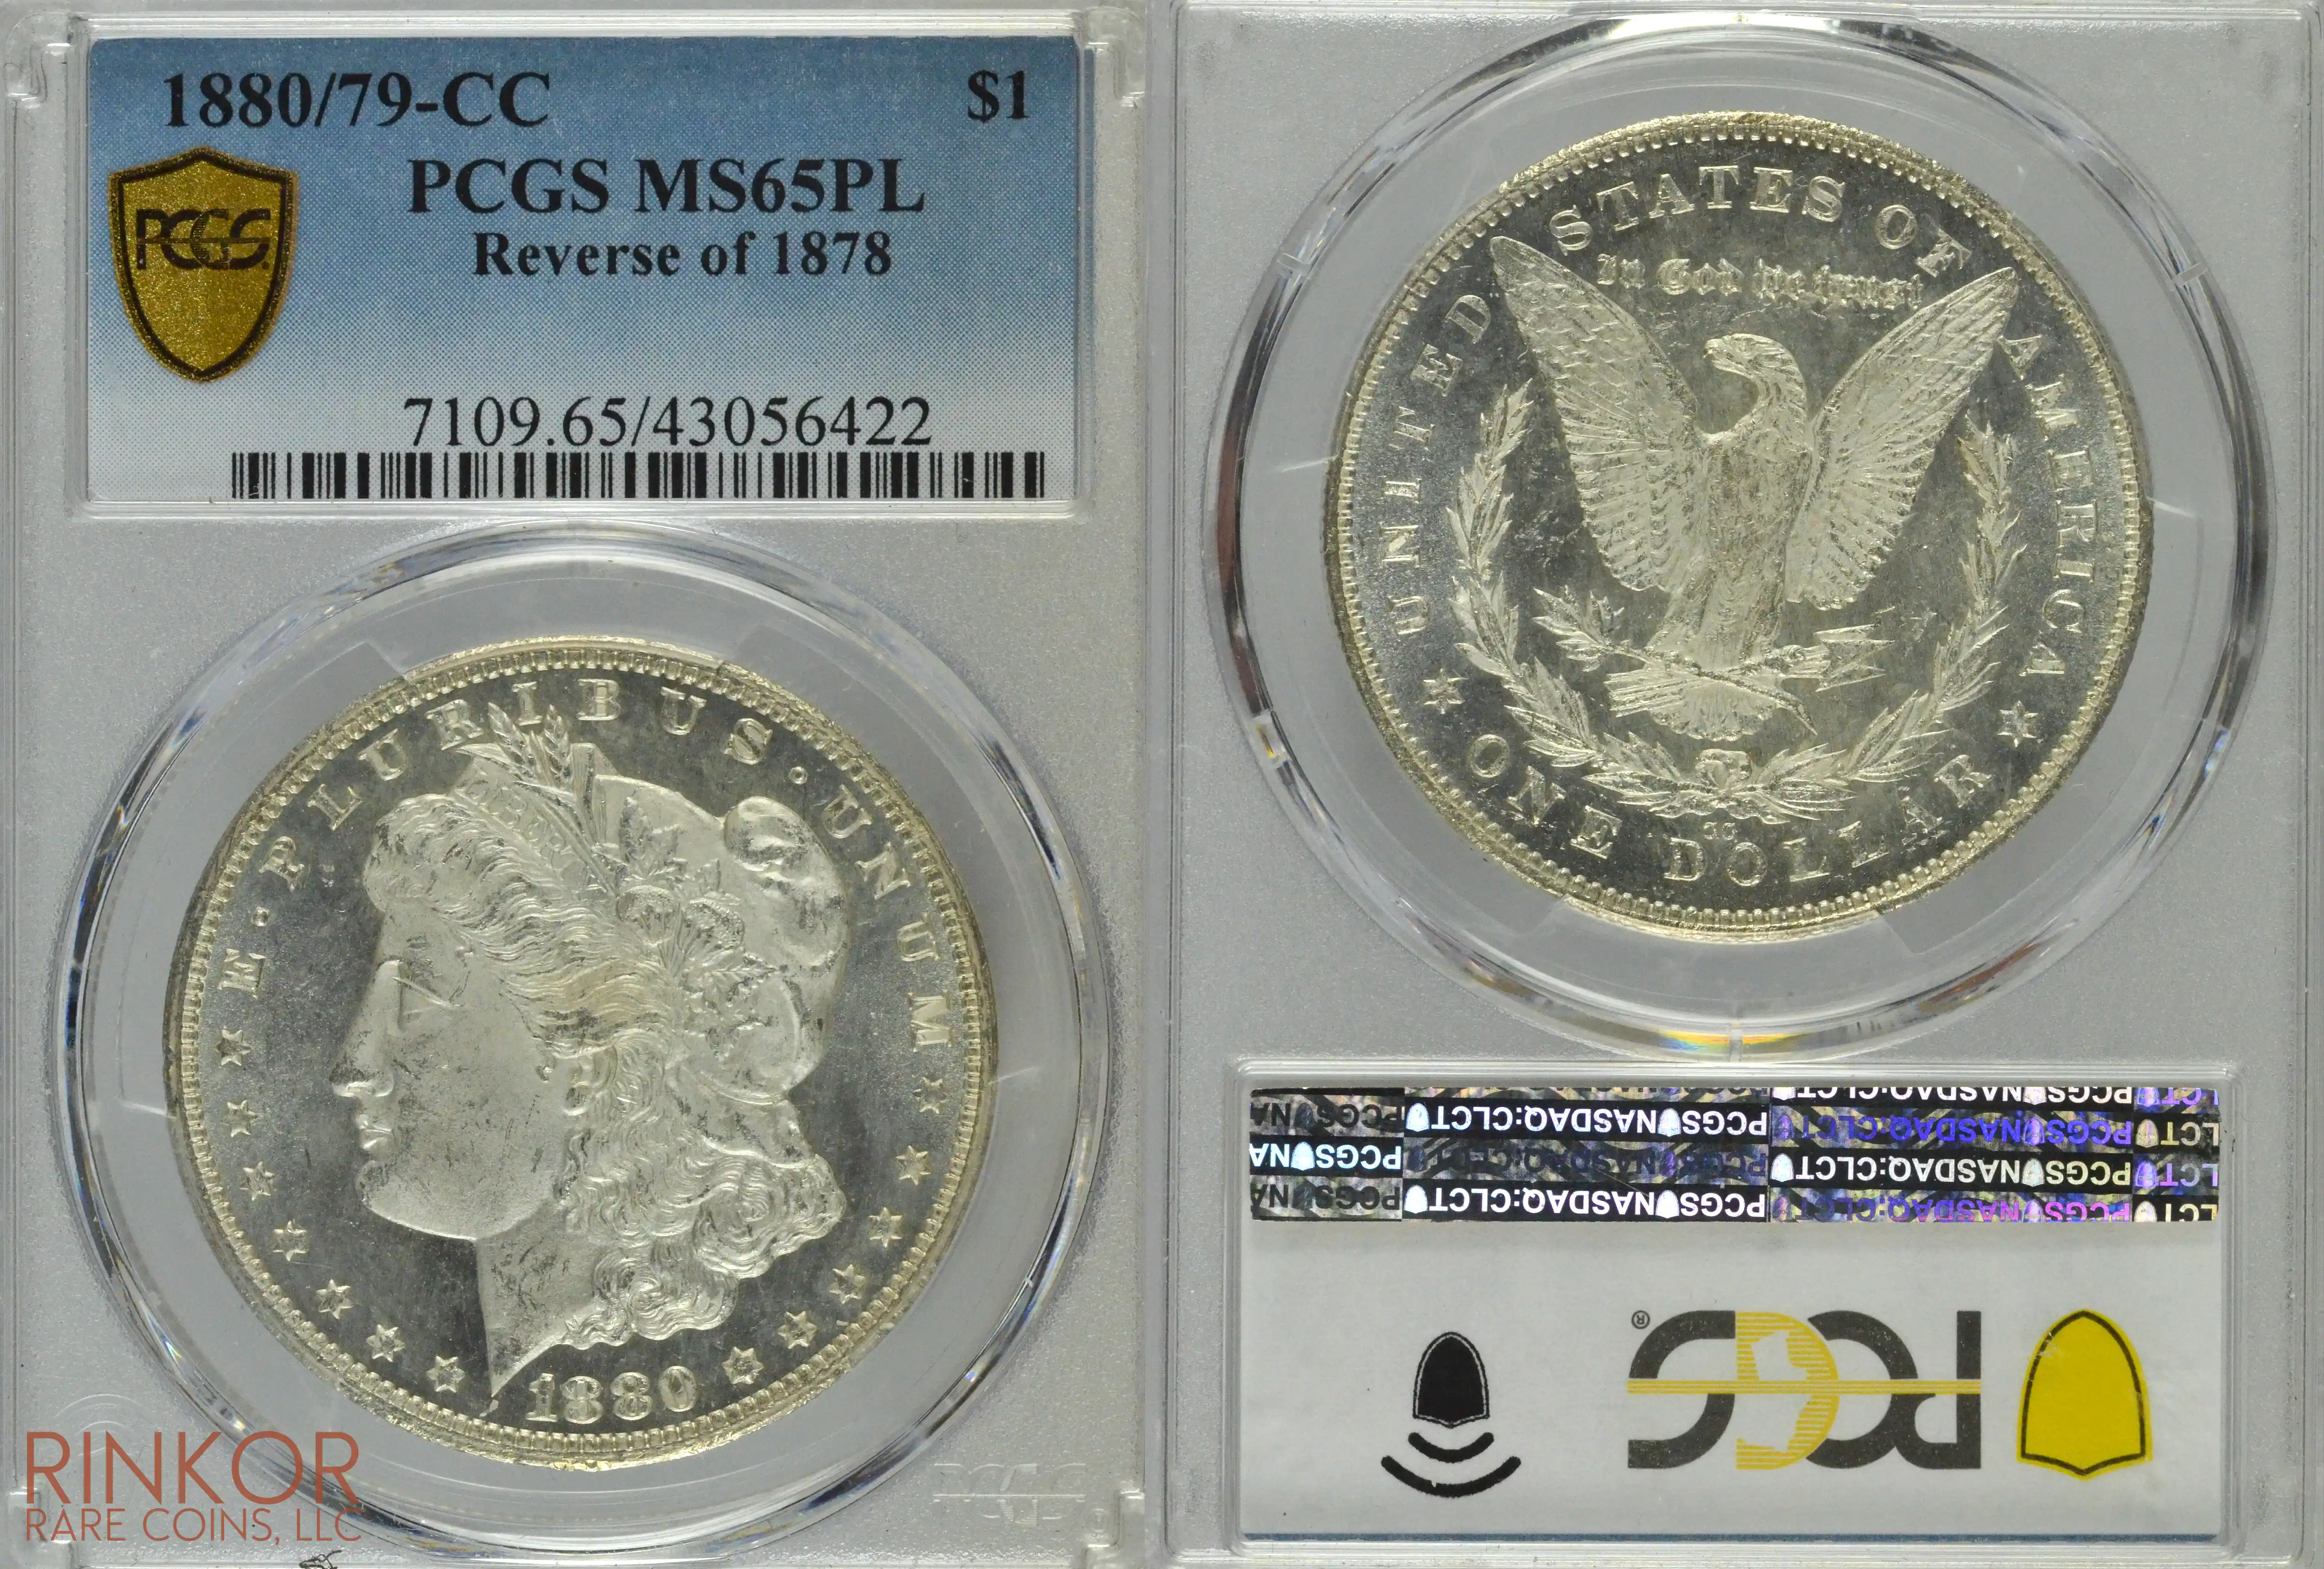 1880/79-CC $1 Reverse of 1878 PCGS MS 65 PL